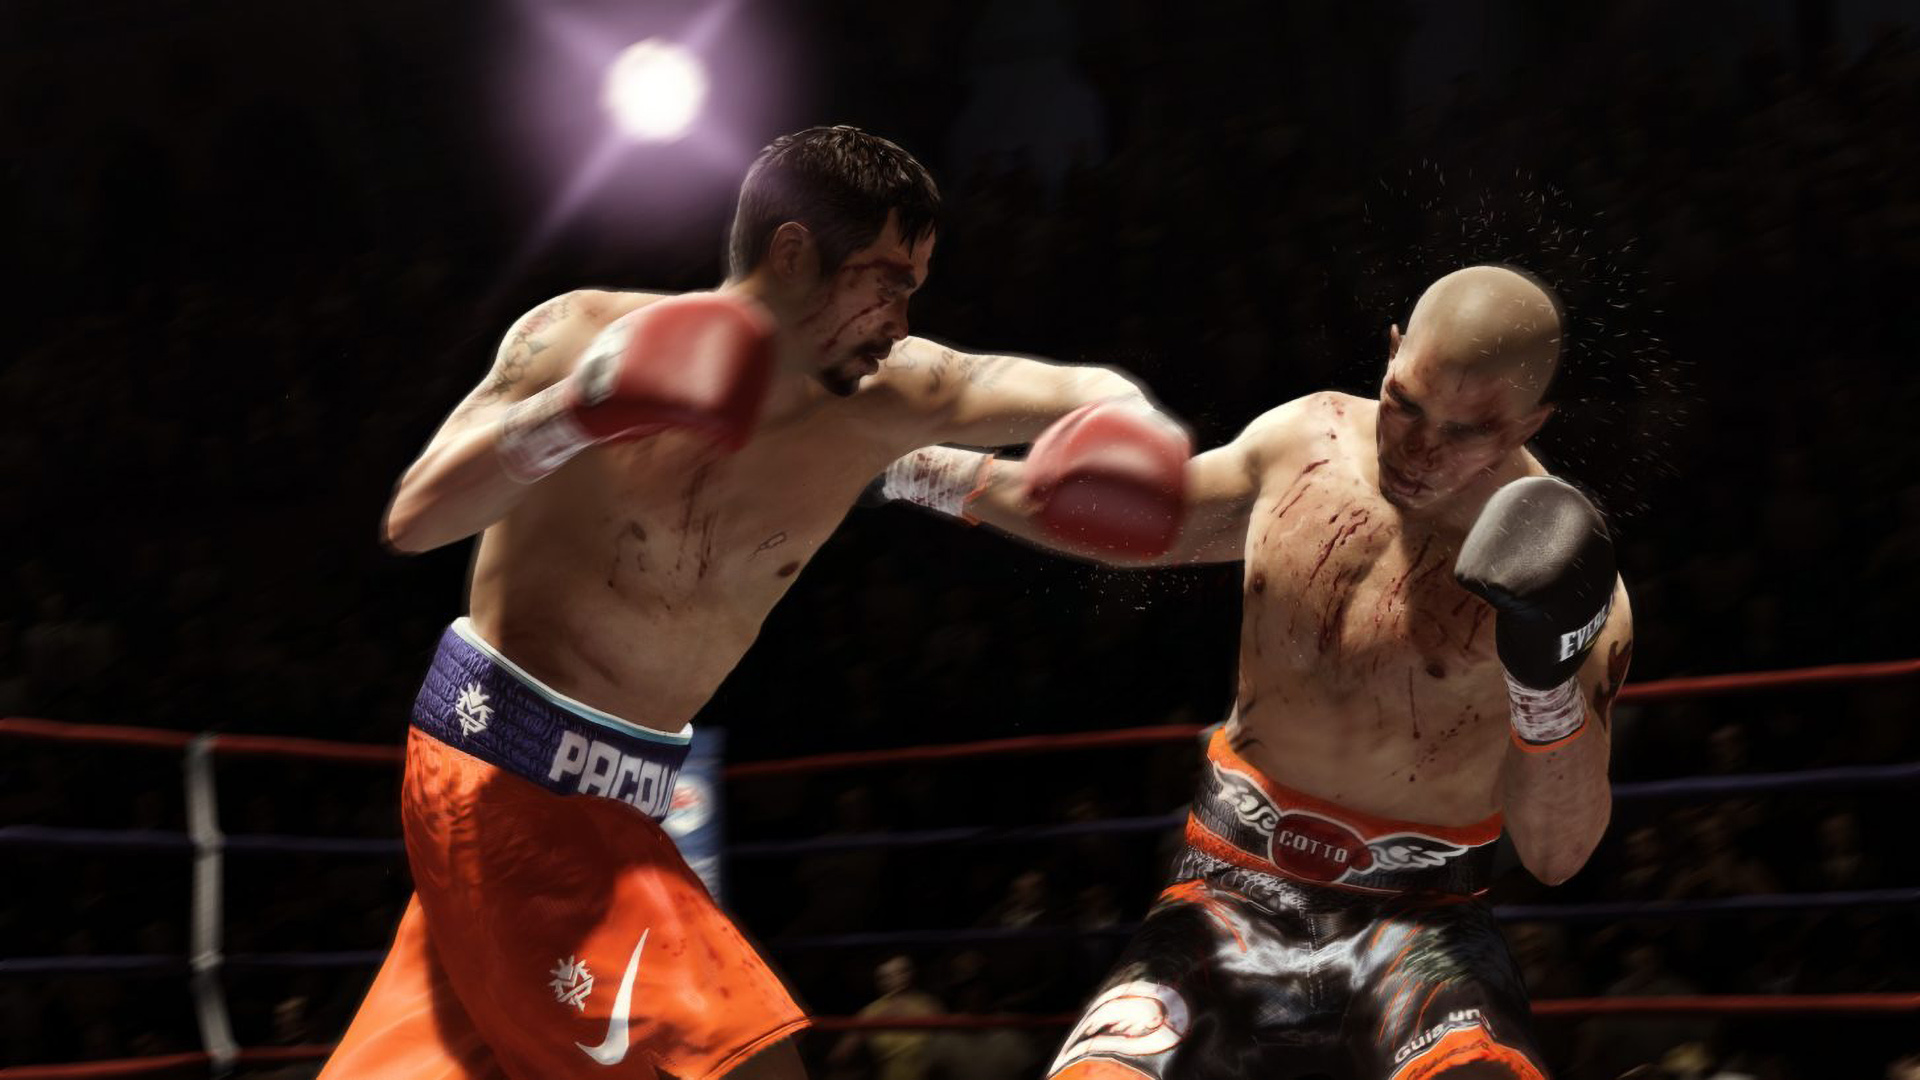 Jogo Fight Night Champion para PS3 no Paraguai - Atacado Games